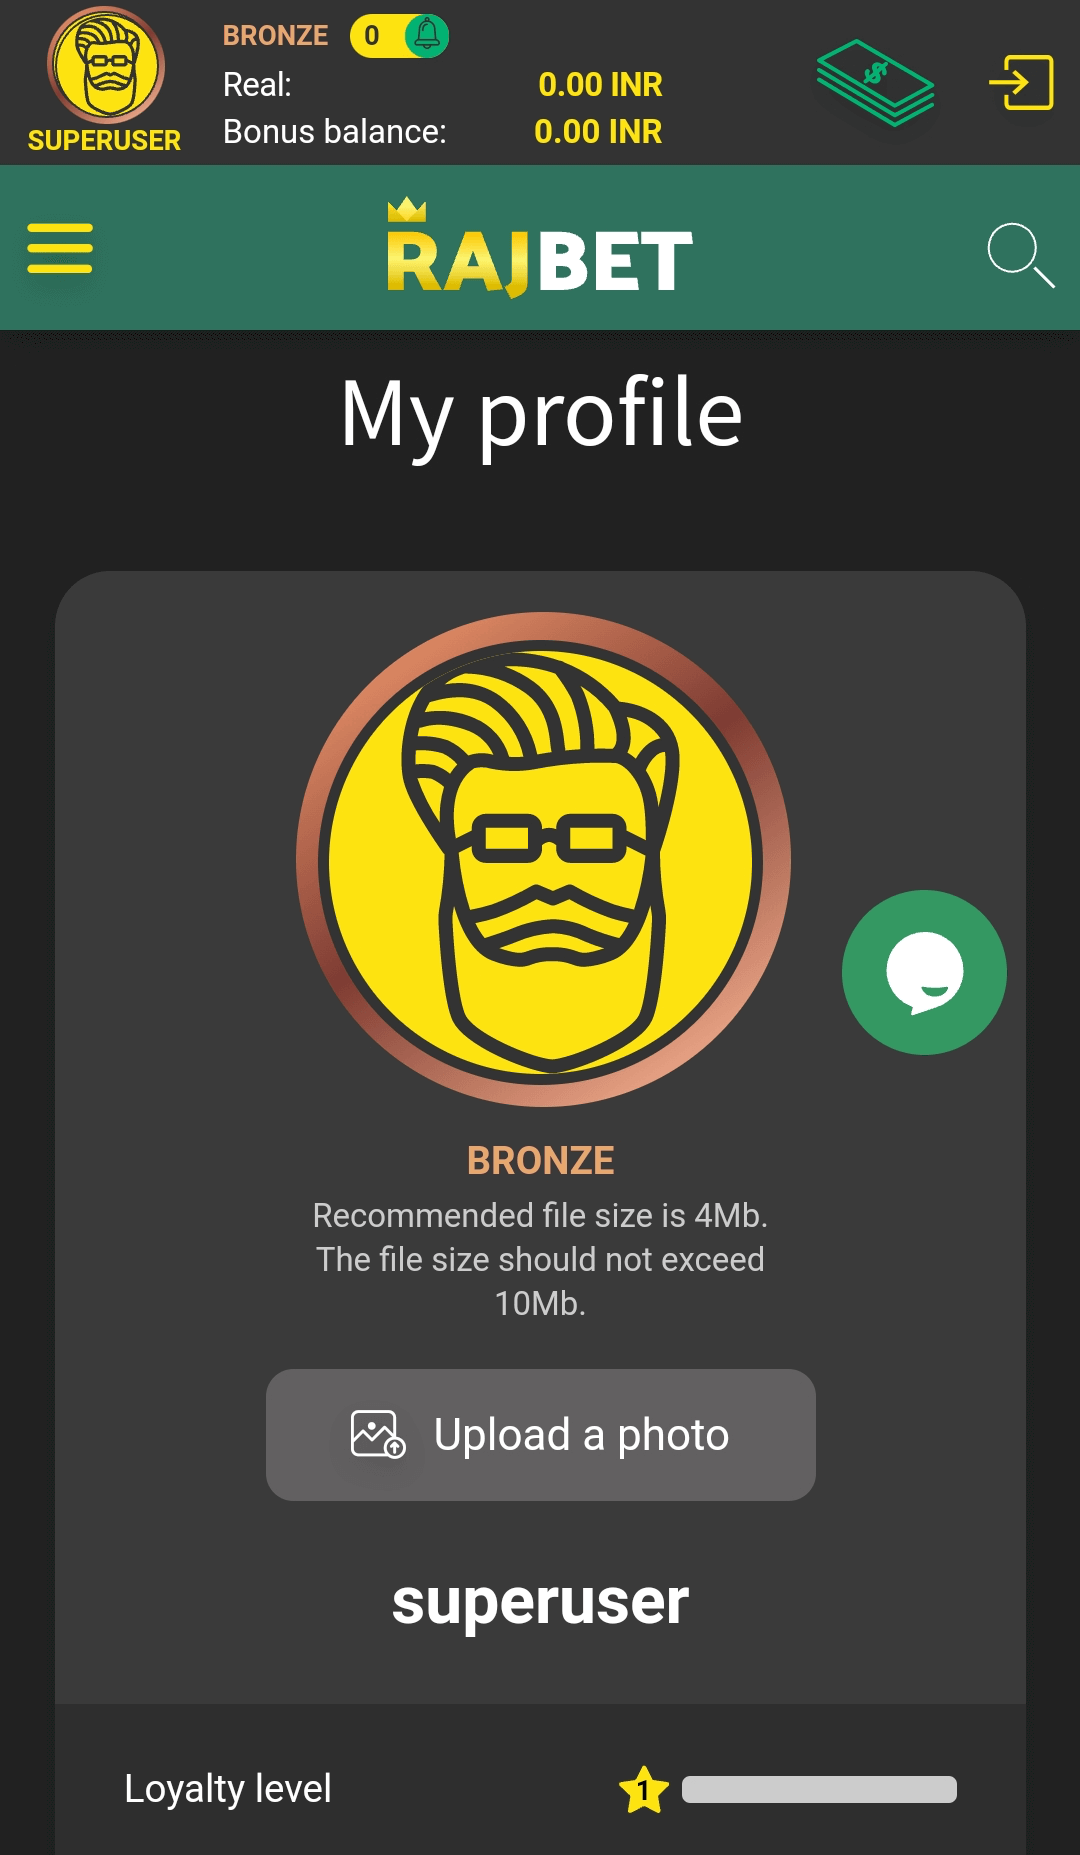 Profile tab in the Rajbet app